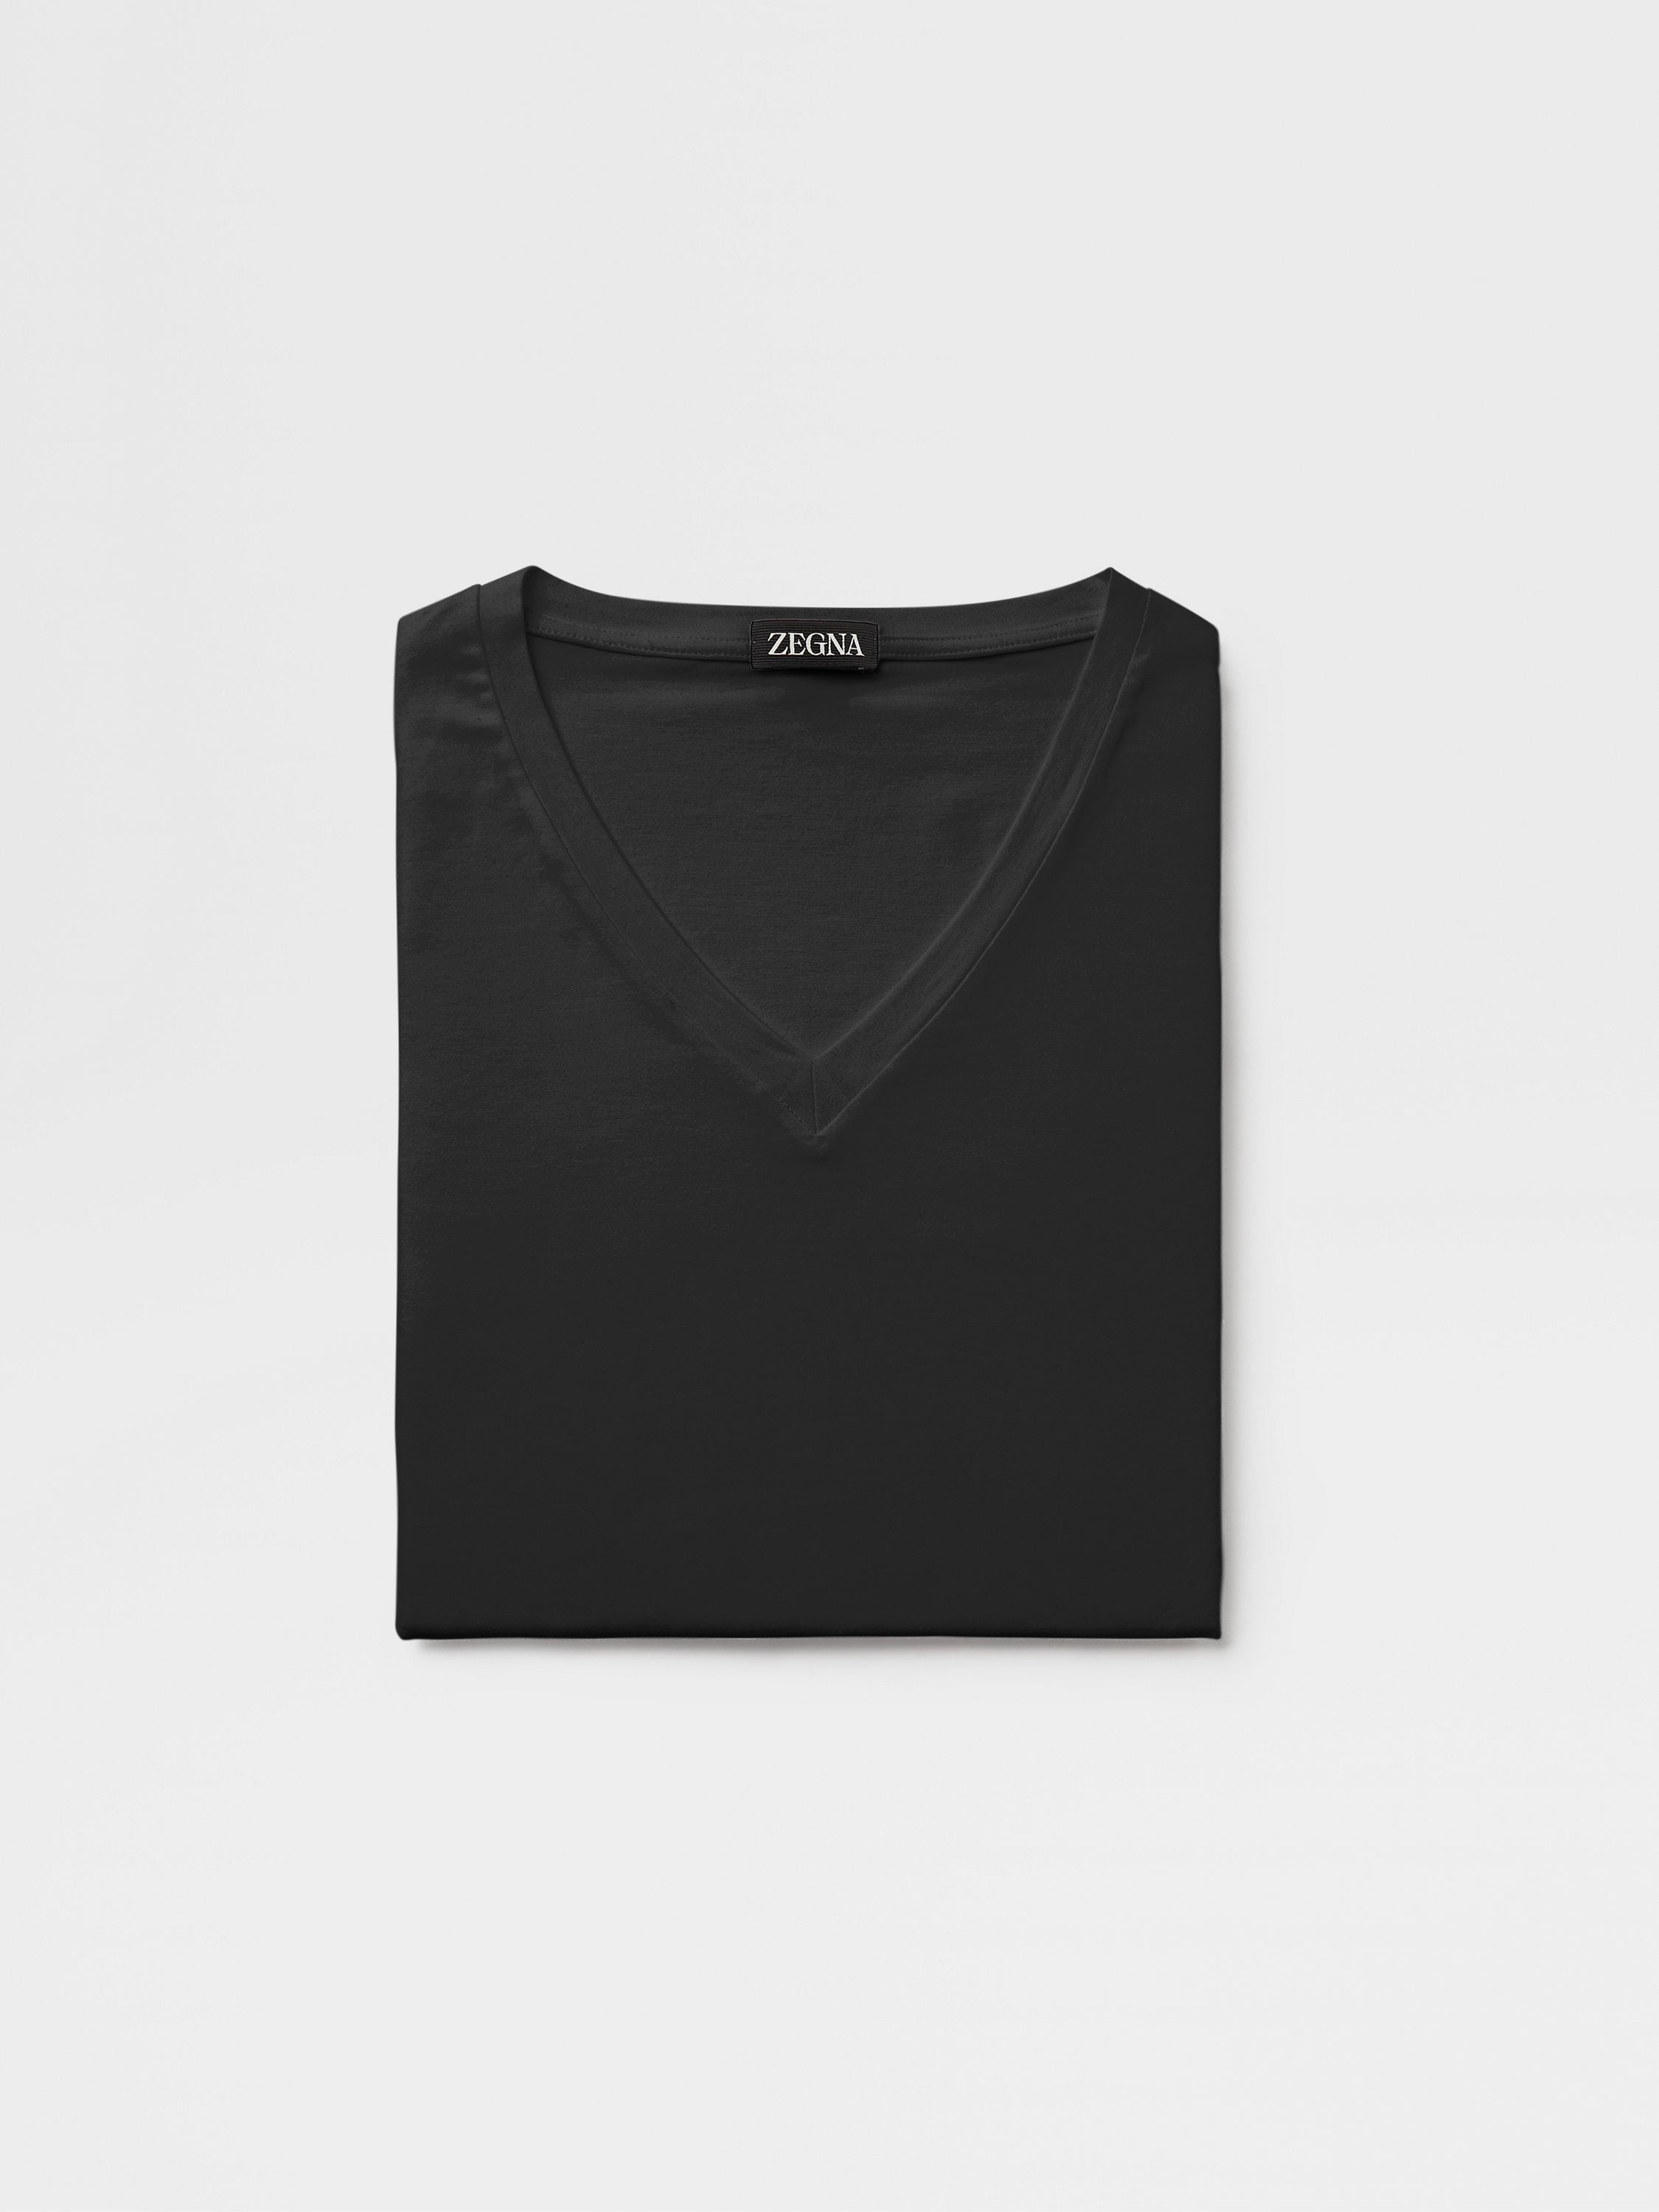 US V-Neck Zegna SS24 22493624 | Black T-Shirt Cotton